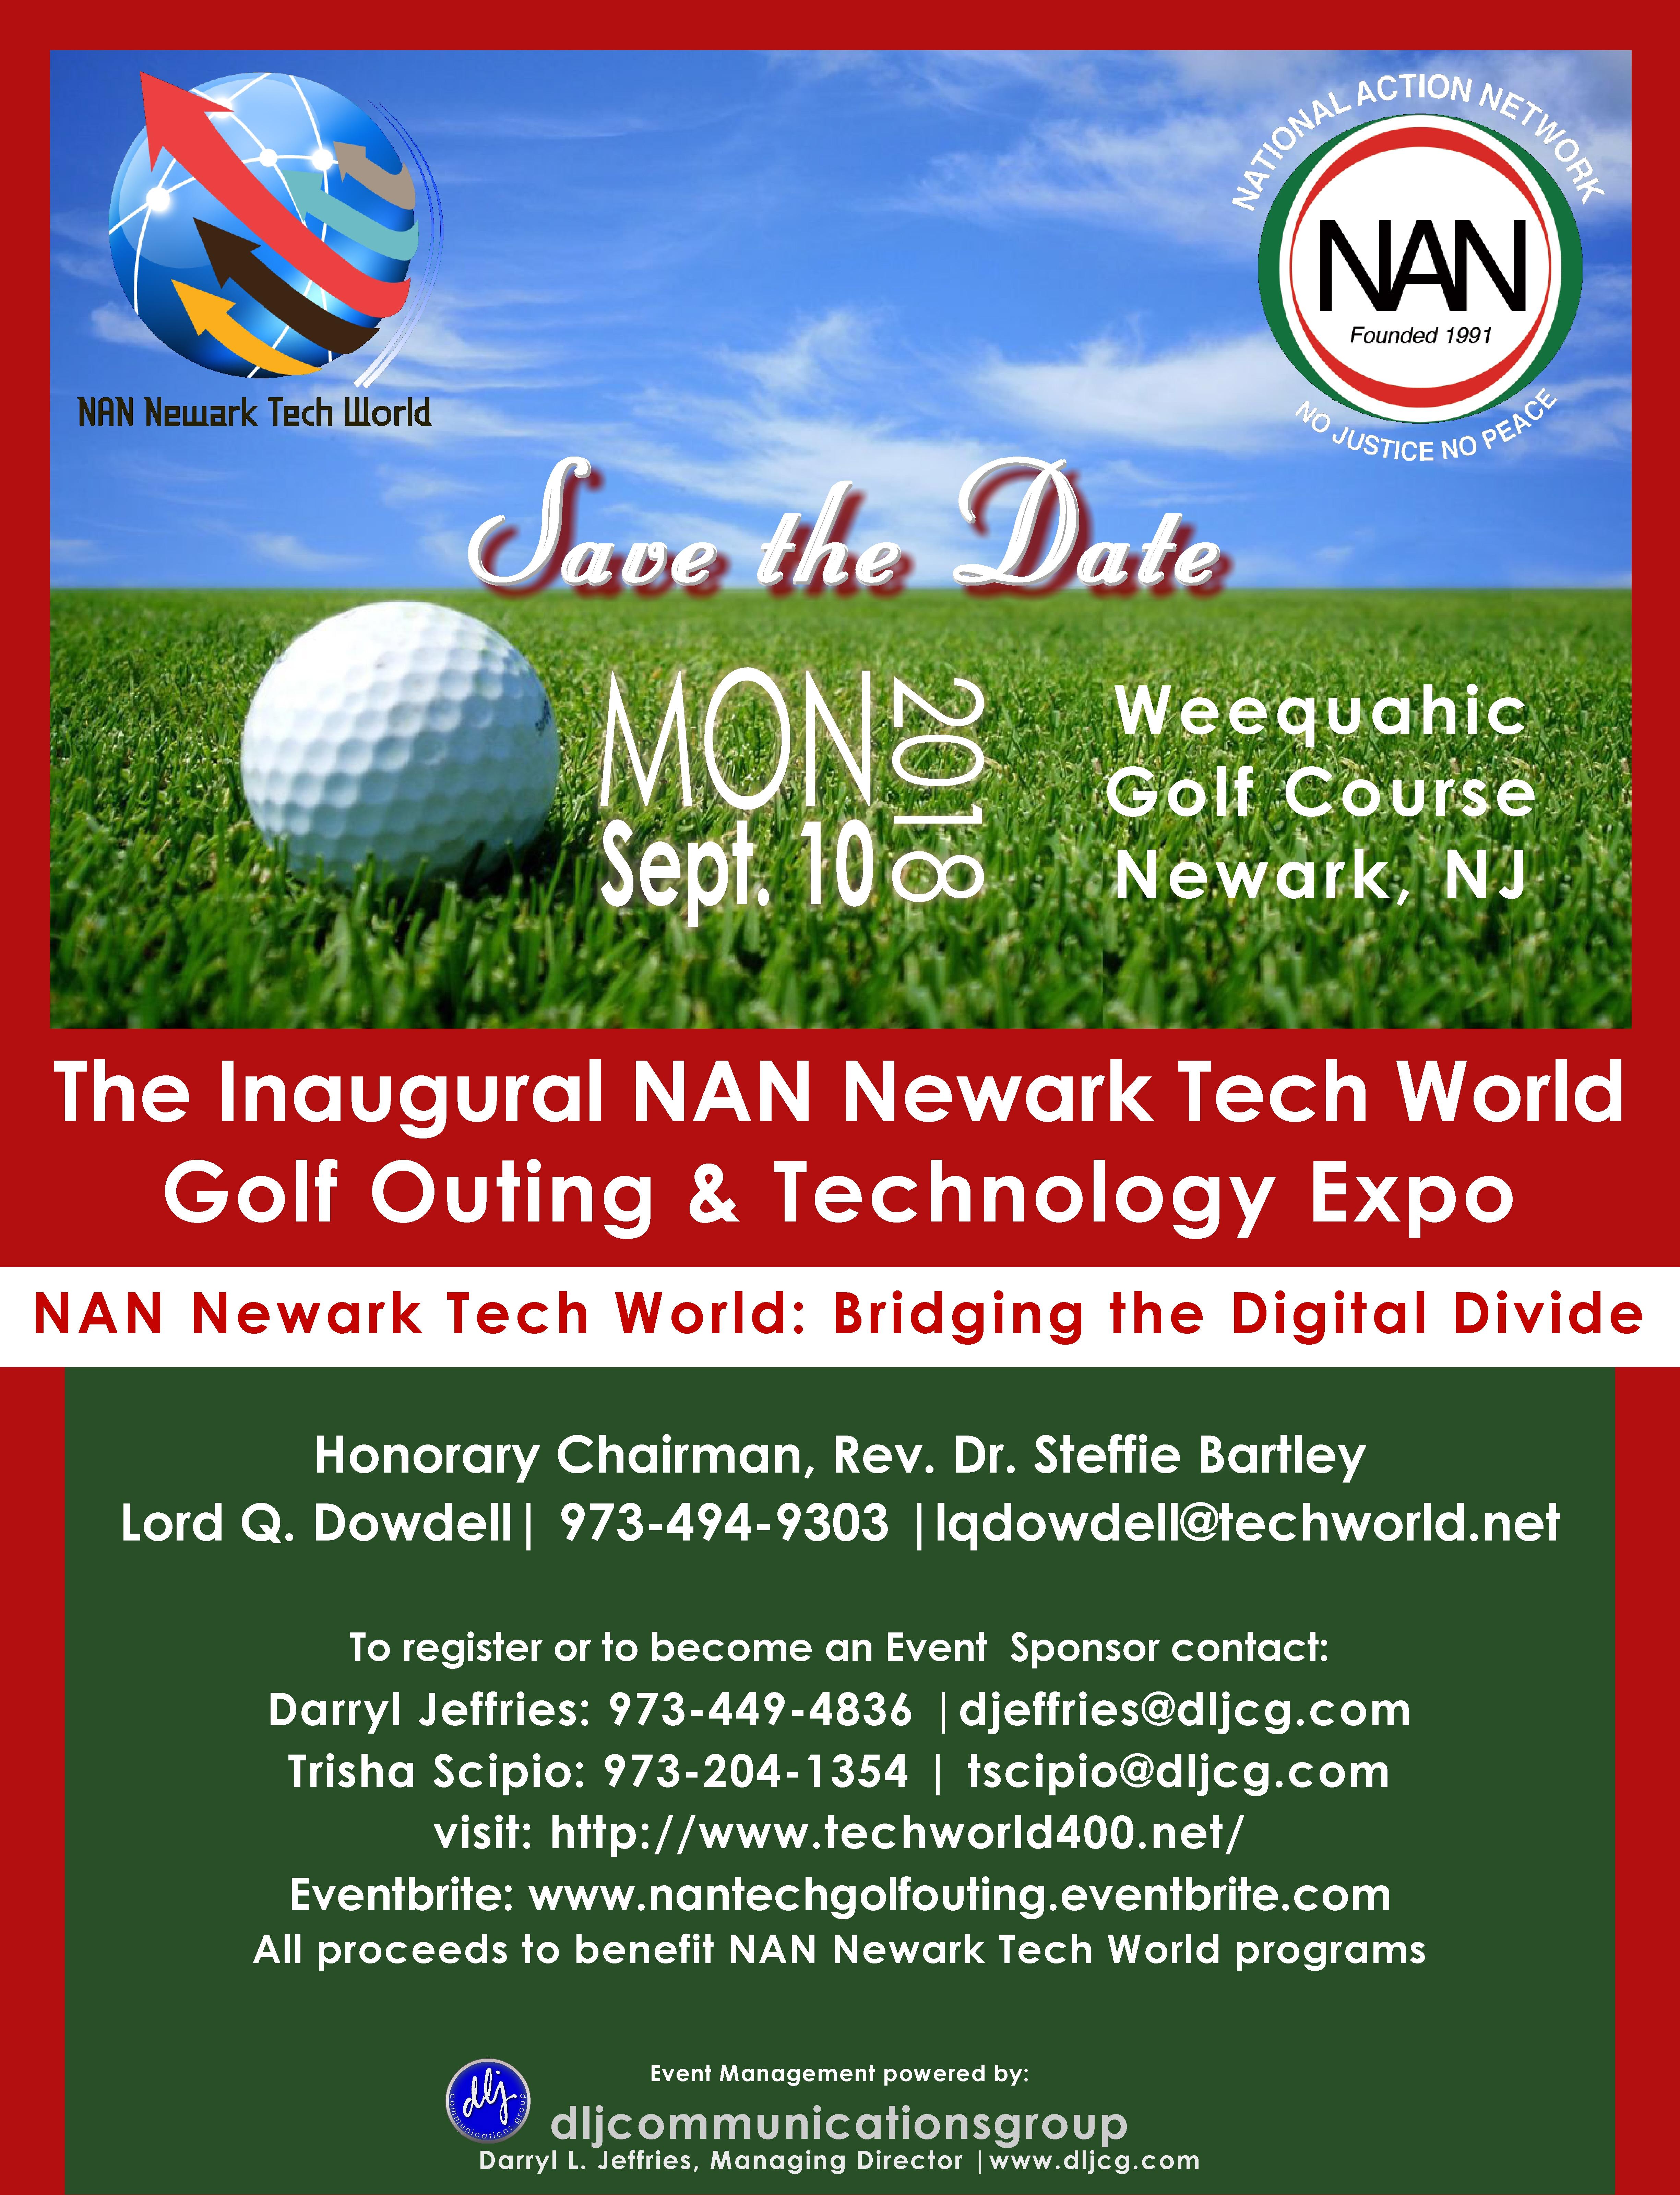 NAN Newark Tech World Golf Outing & Technology Expo